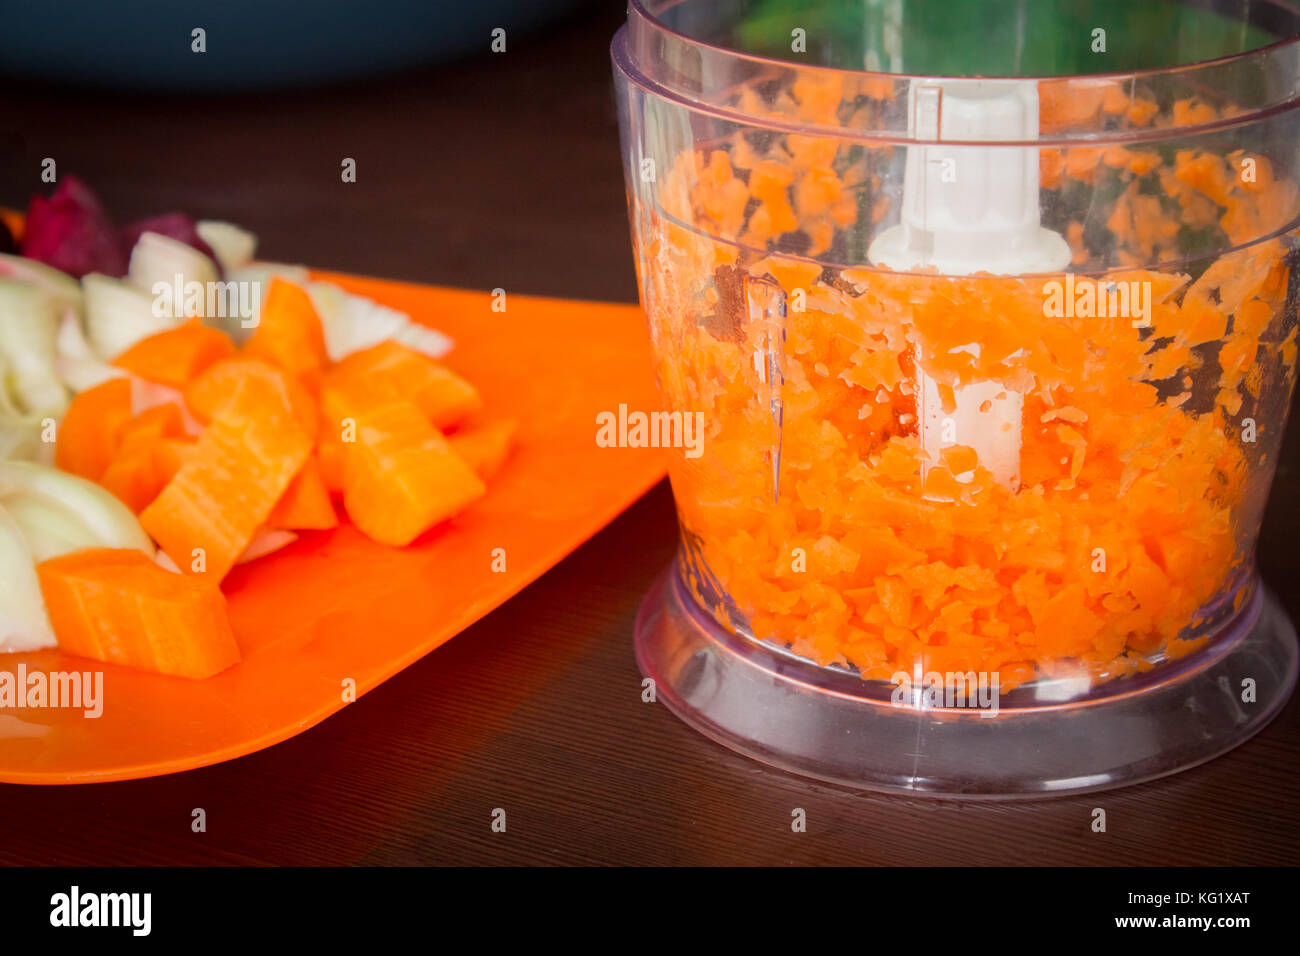 https://c8.alamy.com/comp/KG1XAT/carrots-for-borsch-in-an-electric-chopper-soup-cooking-KG1XAT.jpg